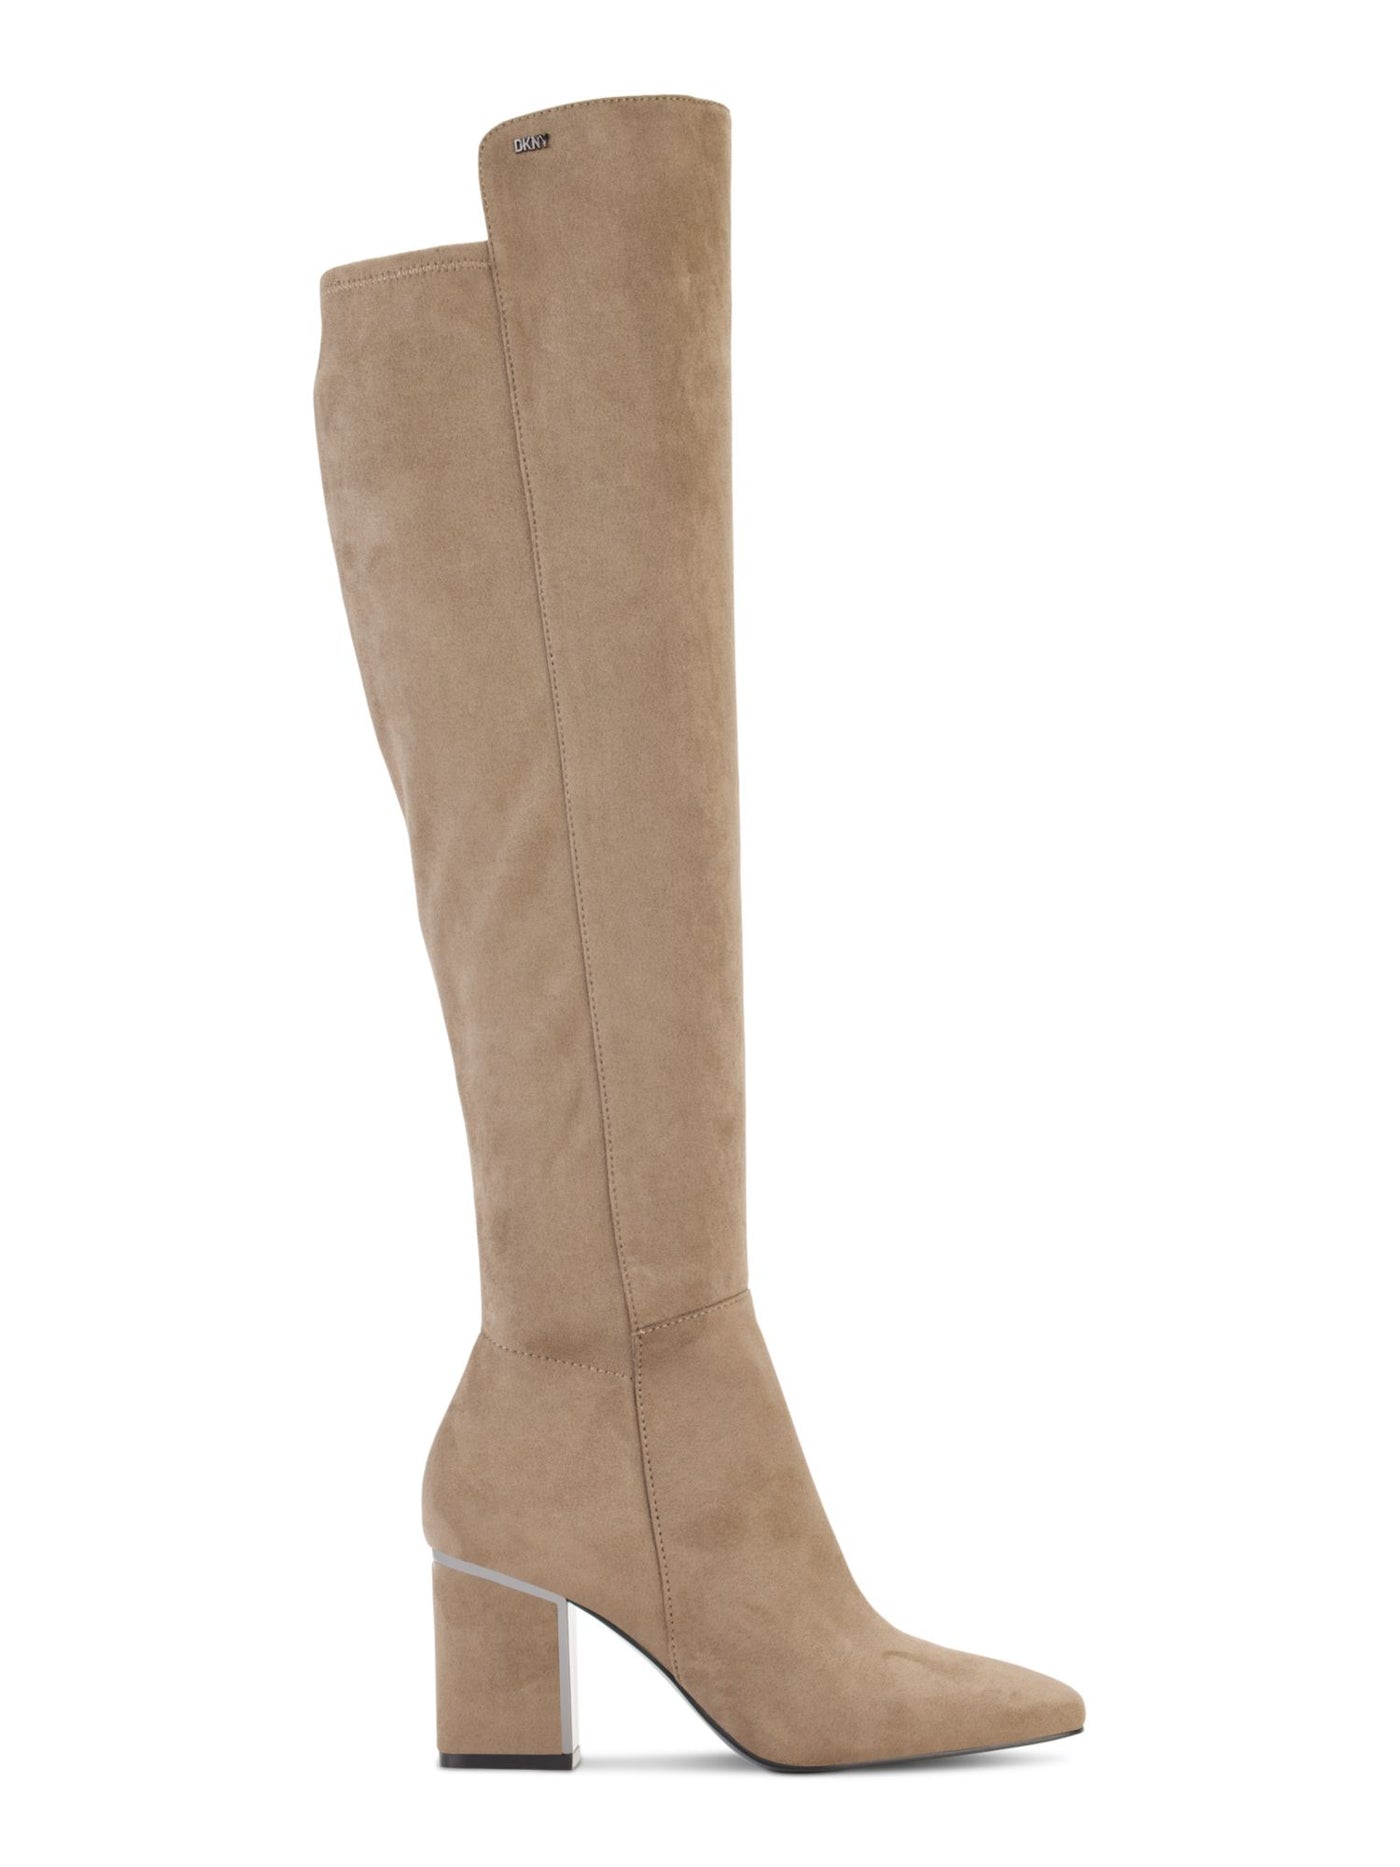 DKNY Womens Beige Cilli Square Toe Block Heel Zip-Up Heeled Boots 9 M